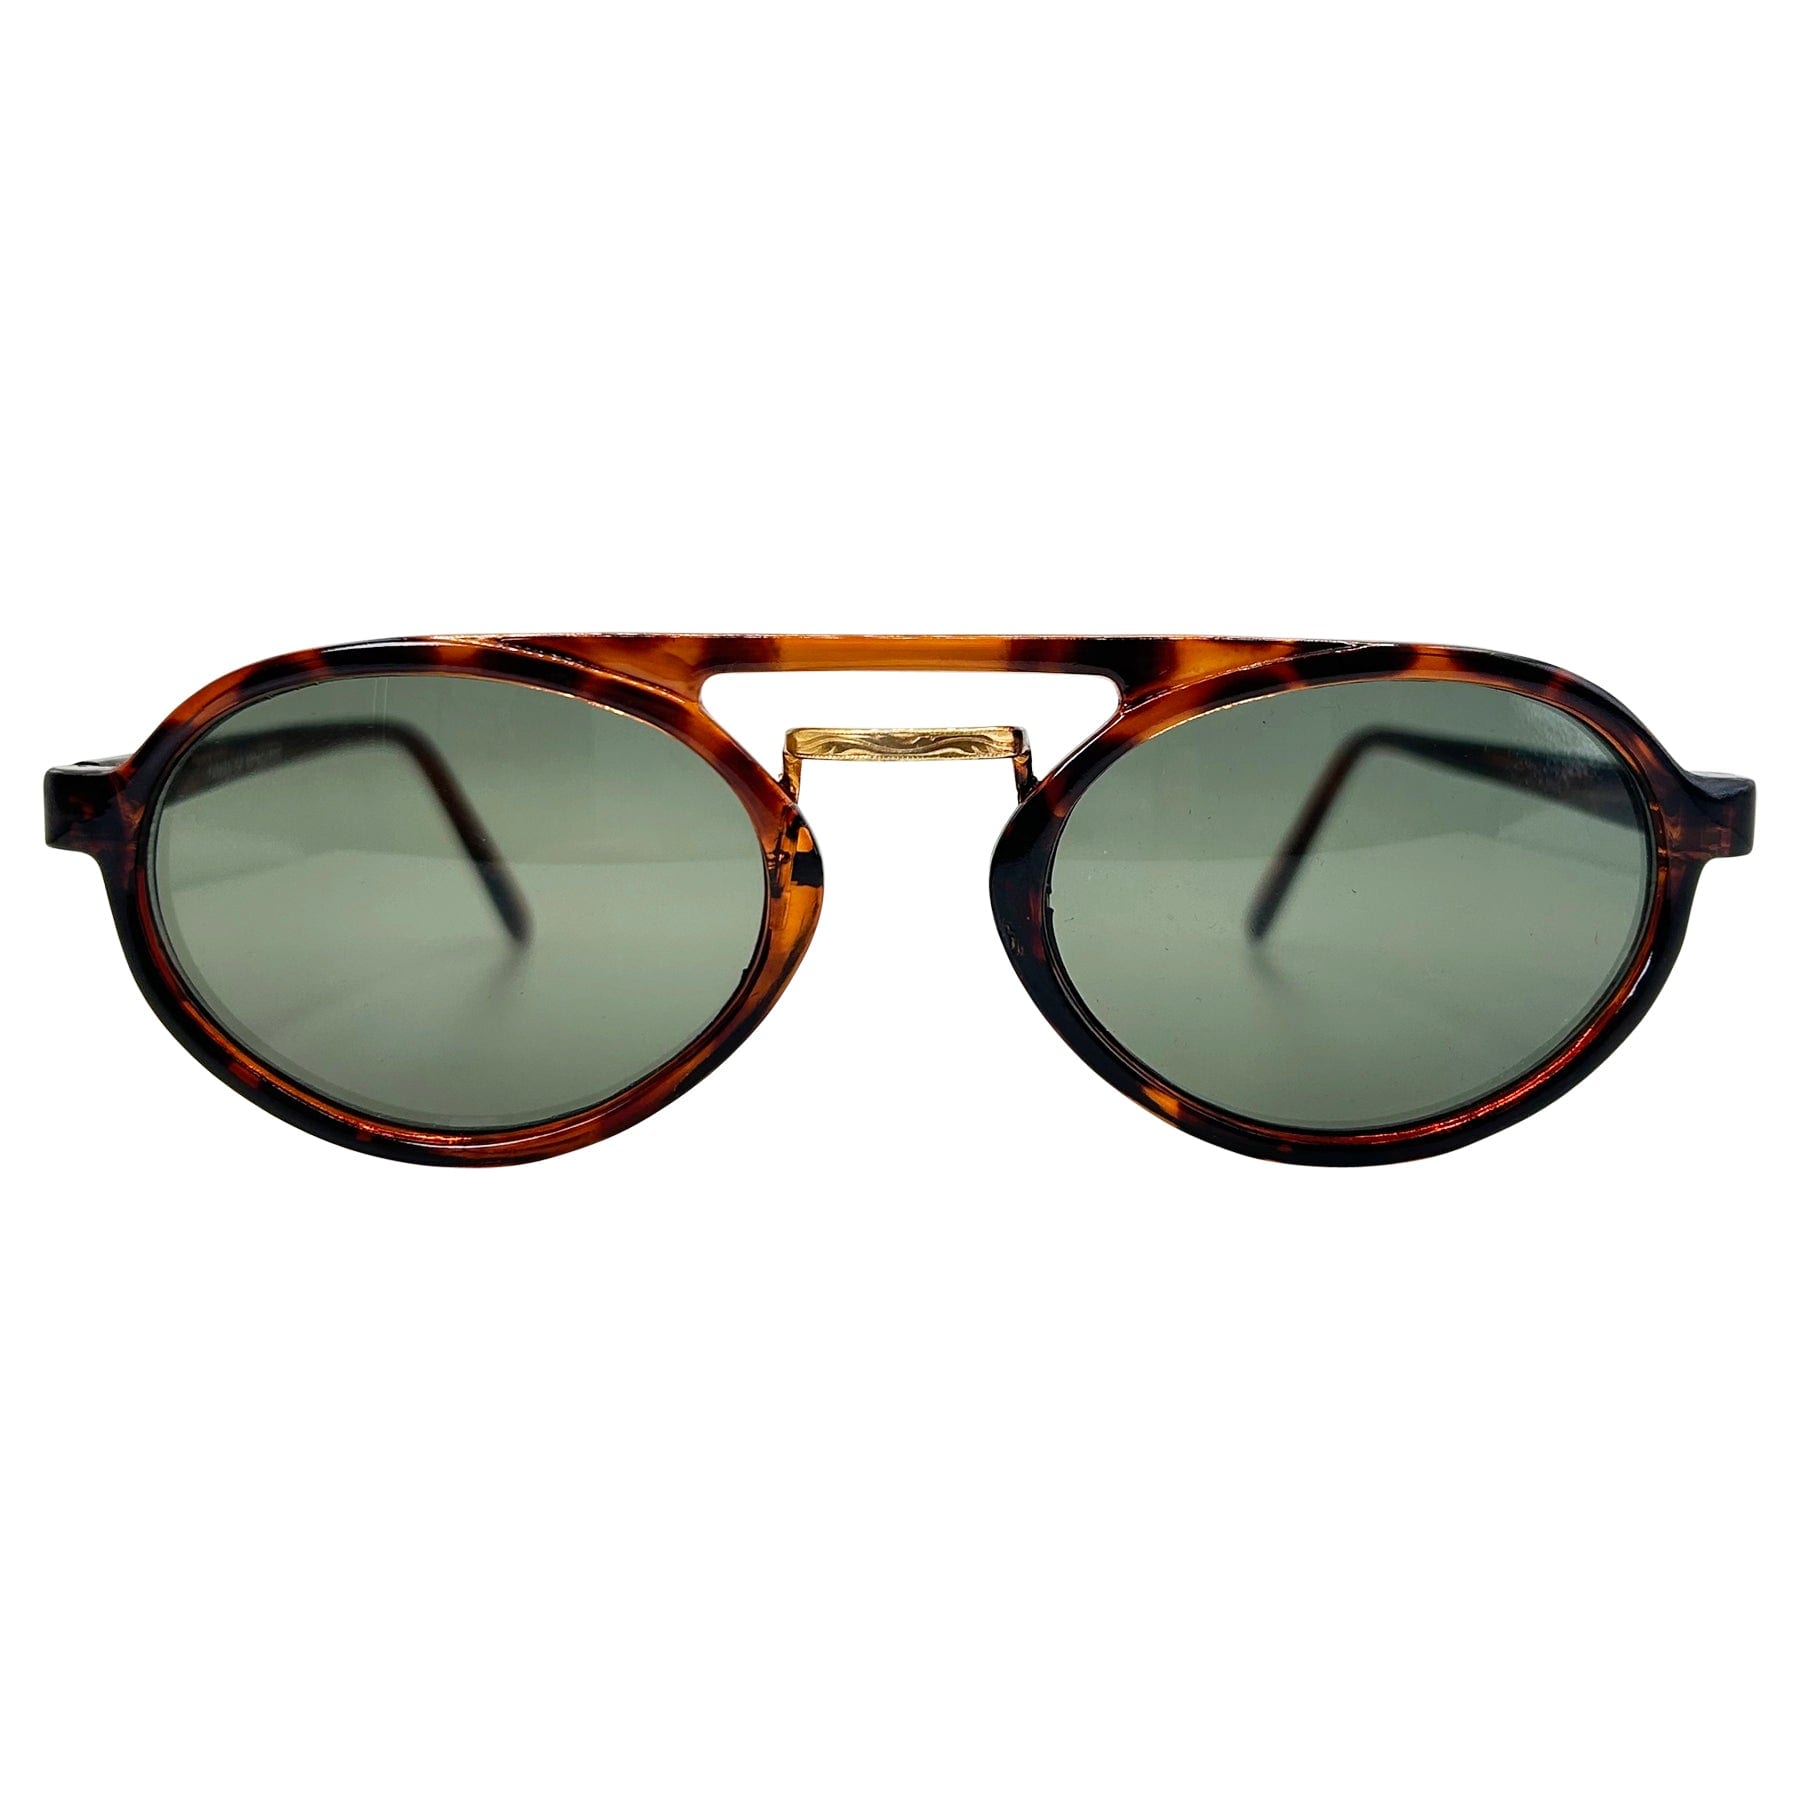 MEPHISTO Tortoise Steampunk Sunglasses